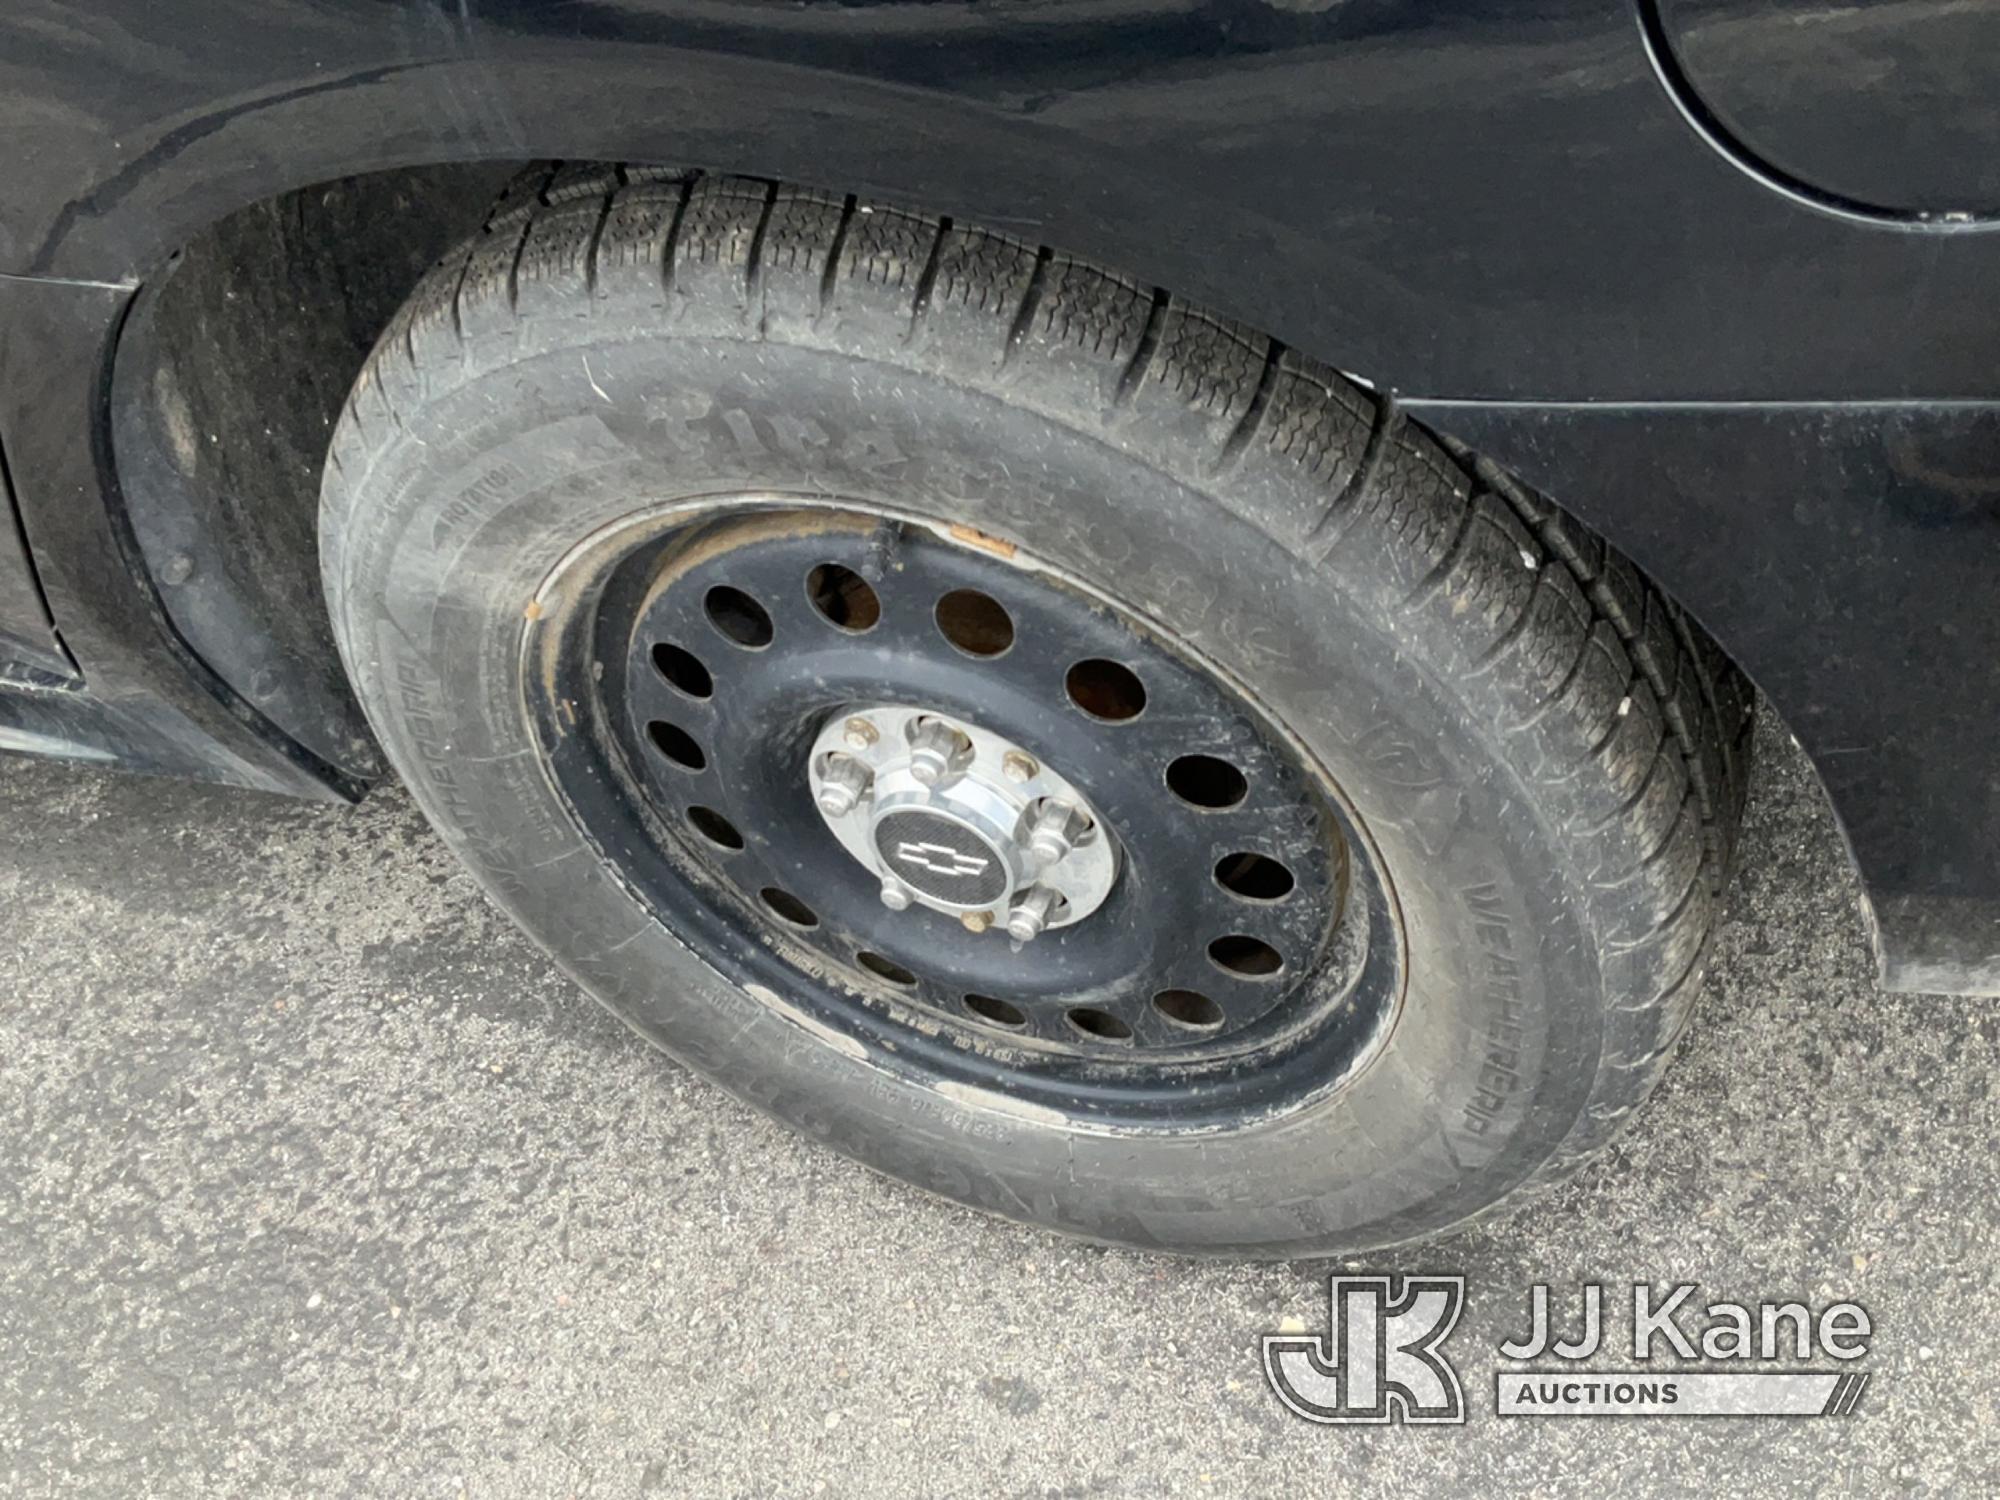 (Salt Lake City, UT) 2010 Chevrolet Impala 4-Door Sedan Bad Head Gasket, Condition Unknown, Airbag L